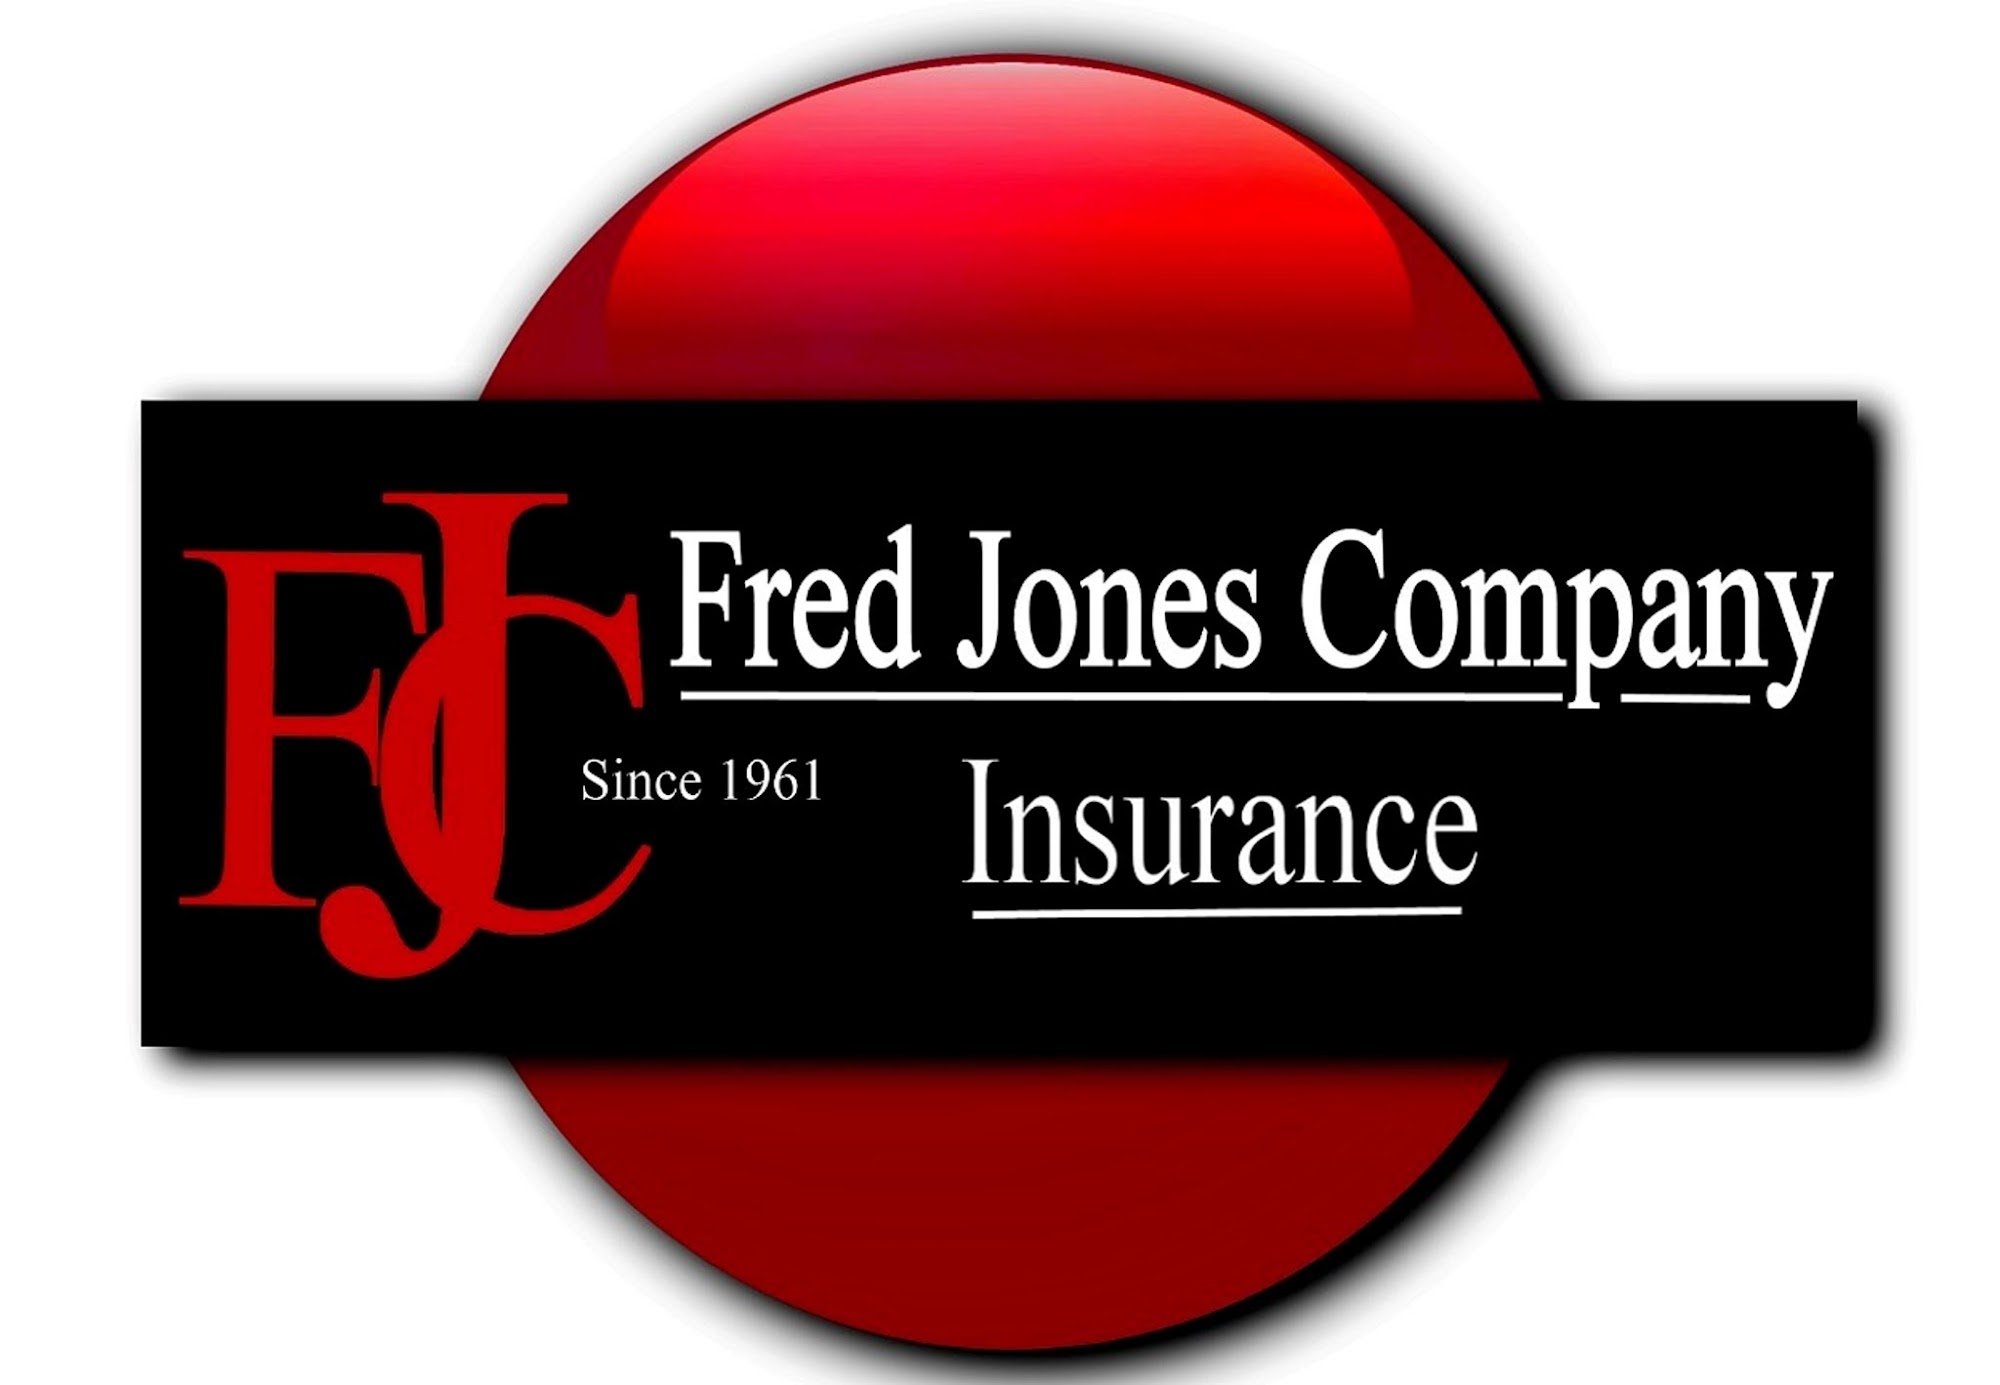 Fred Jones Insurance Company